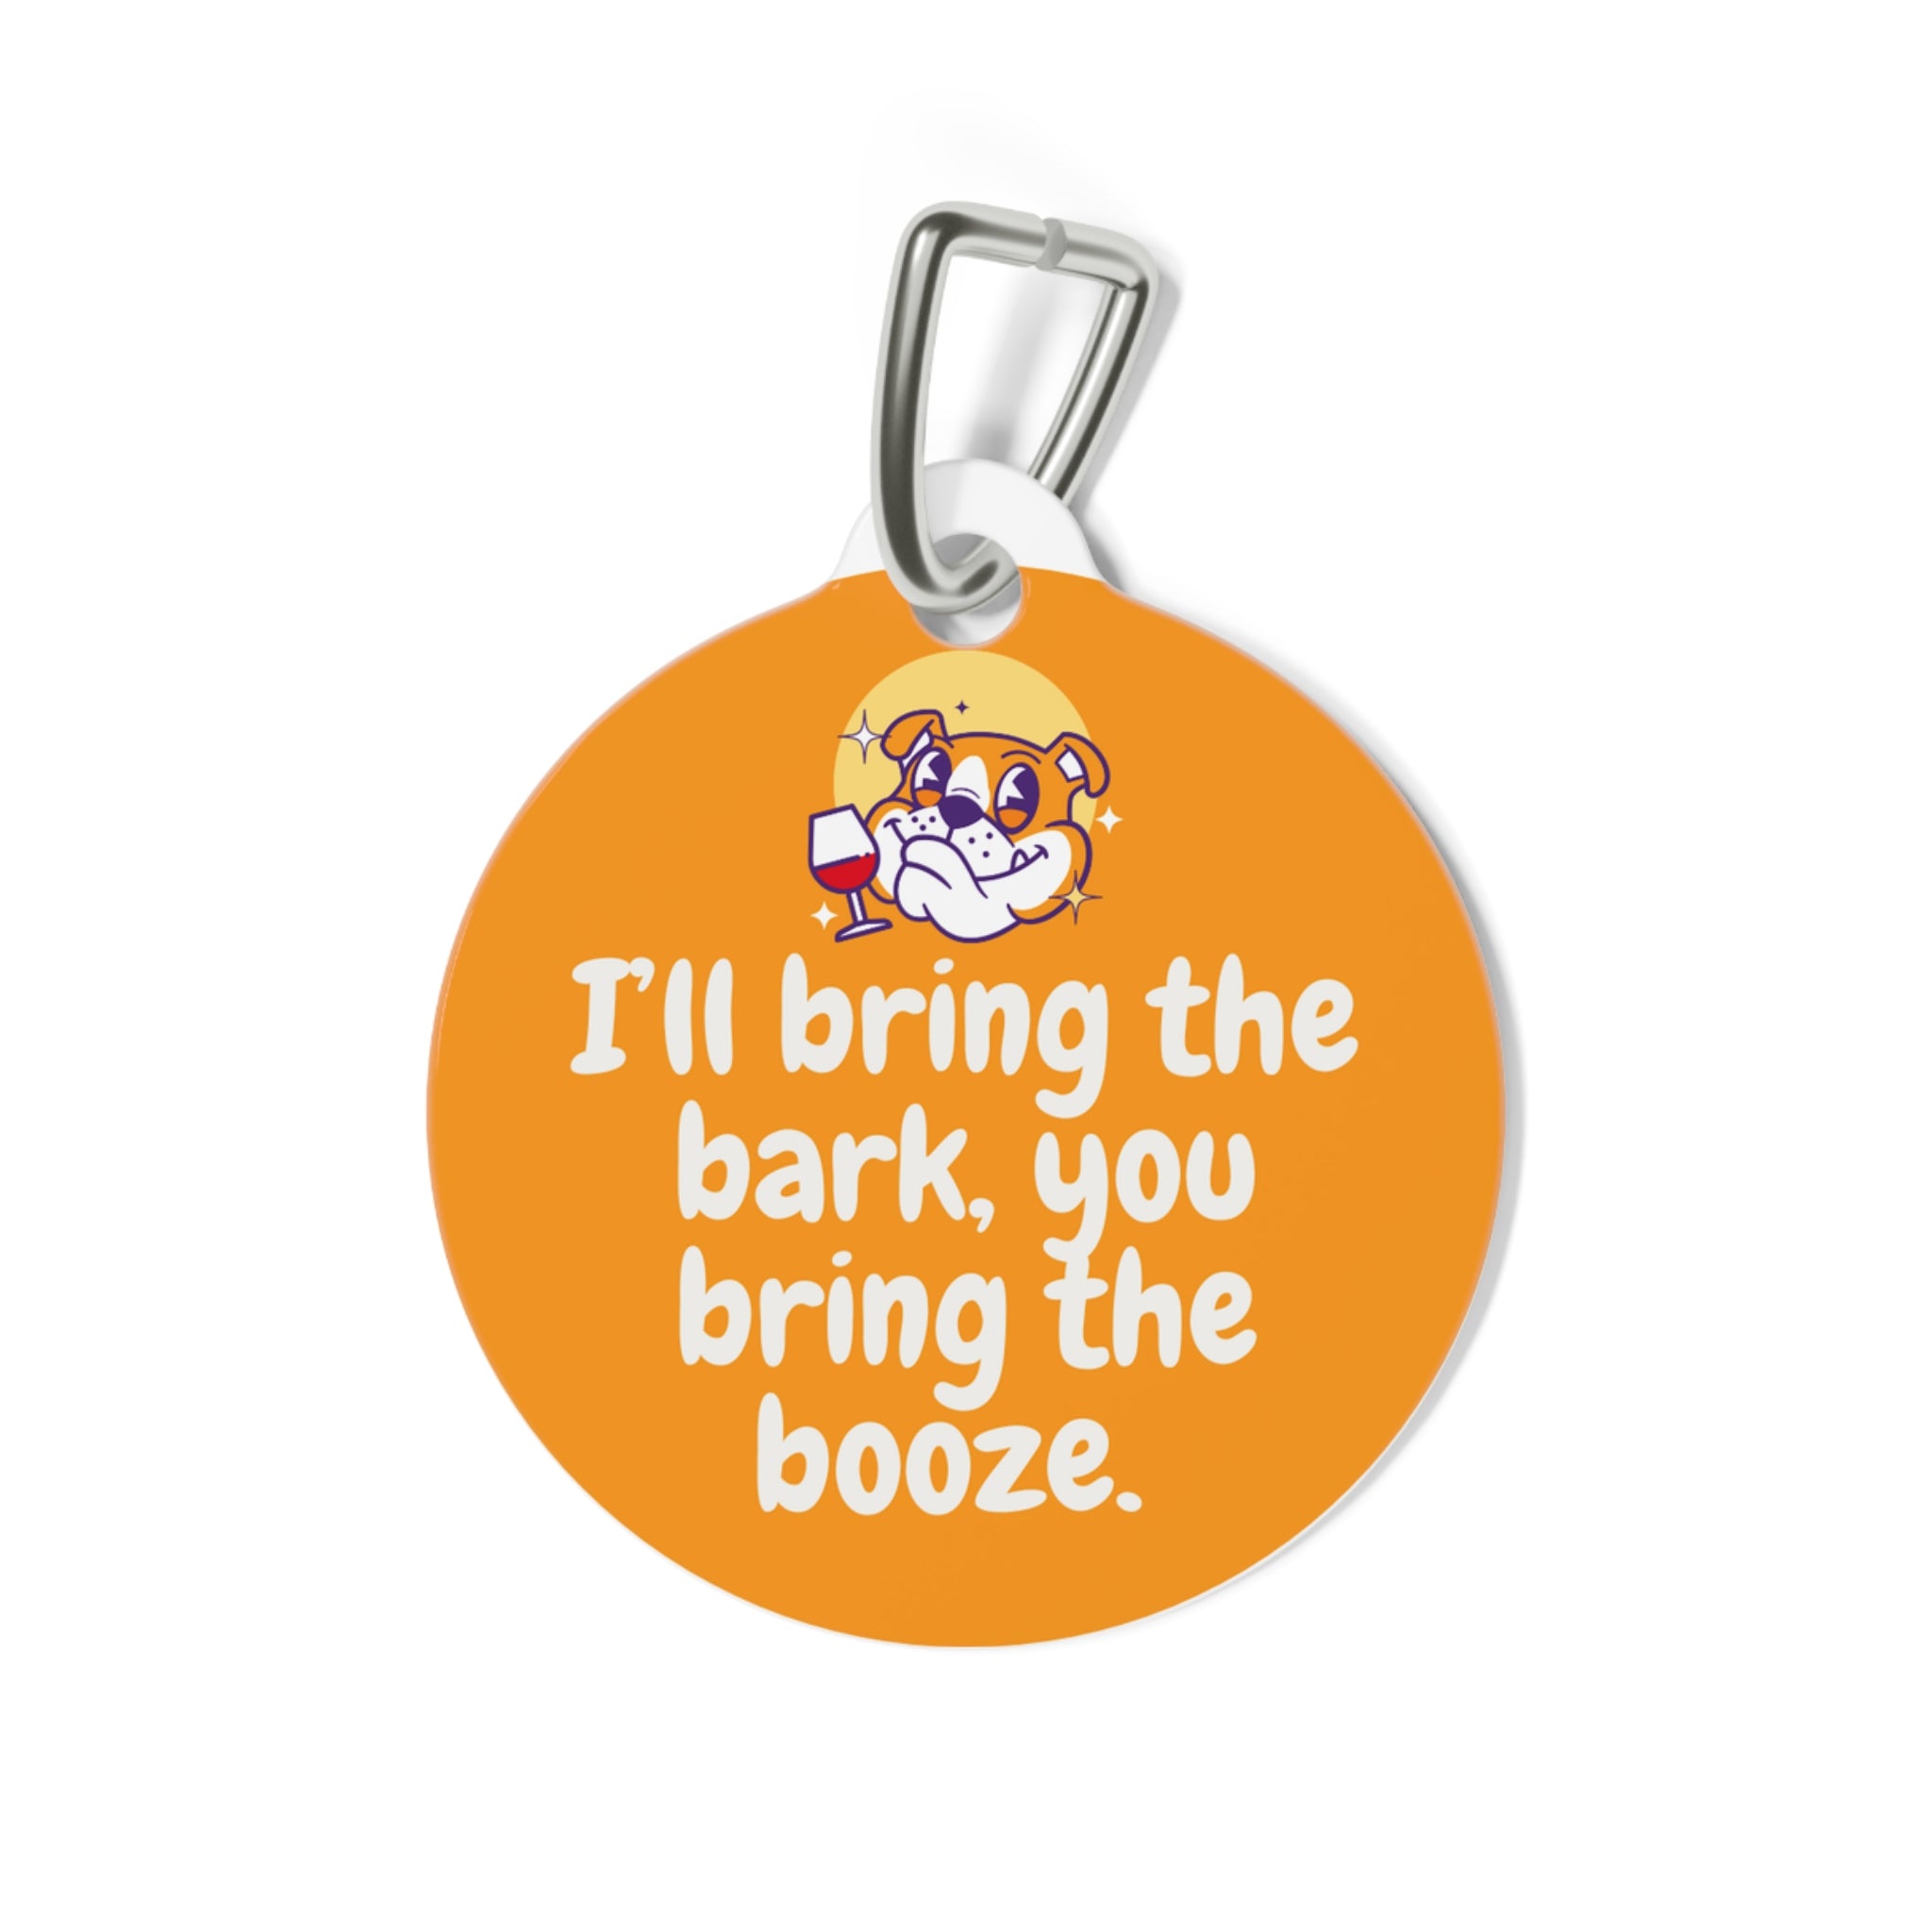 Tipsy Bully Dog Tags: "I'll Bring the Bark, You Bring the Booze" Edition - Orange